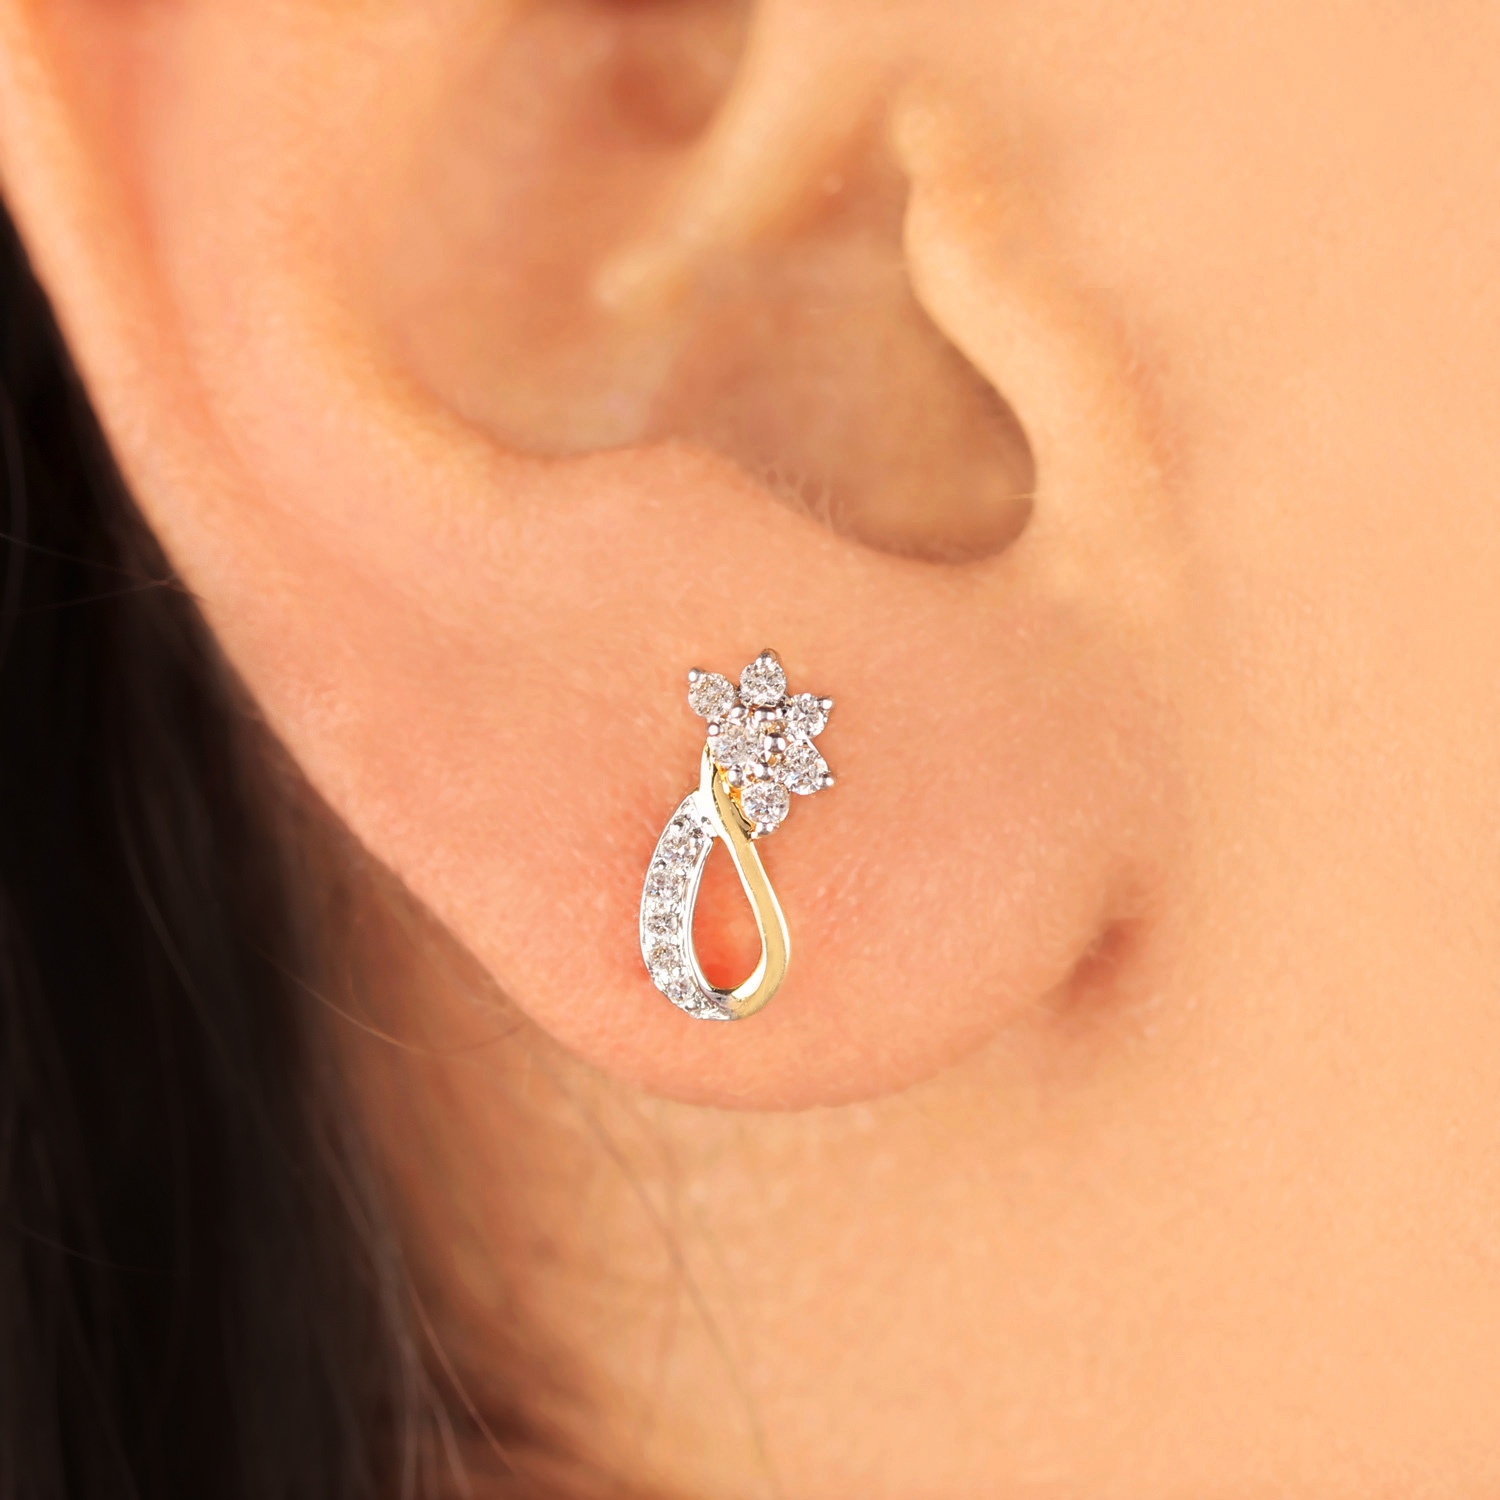 Unique Desined Diamond Earring